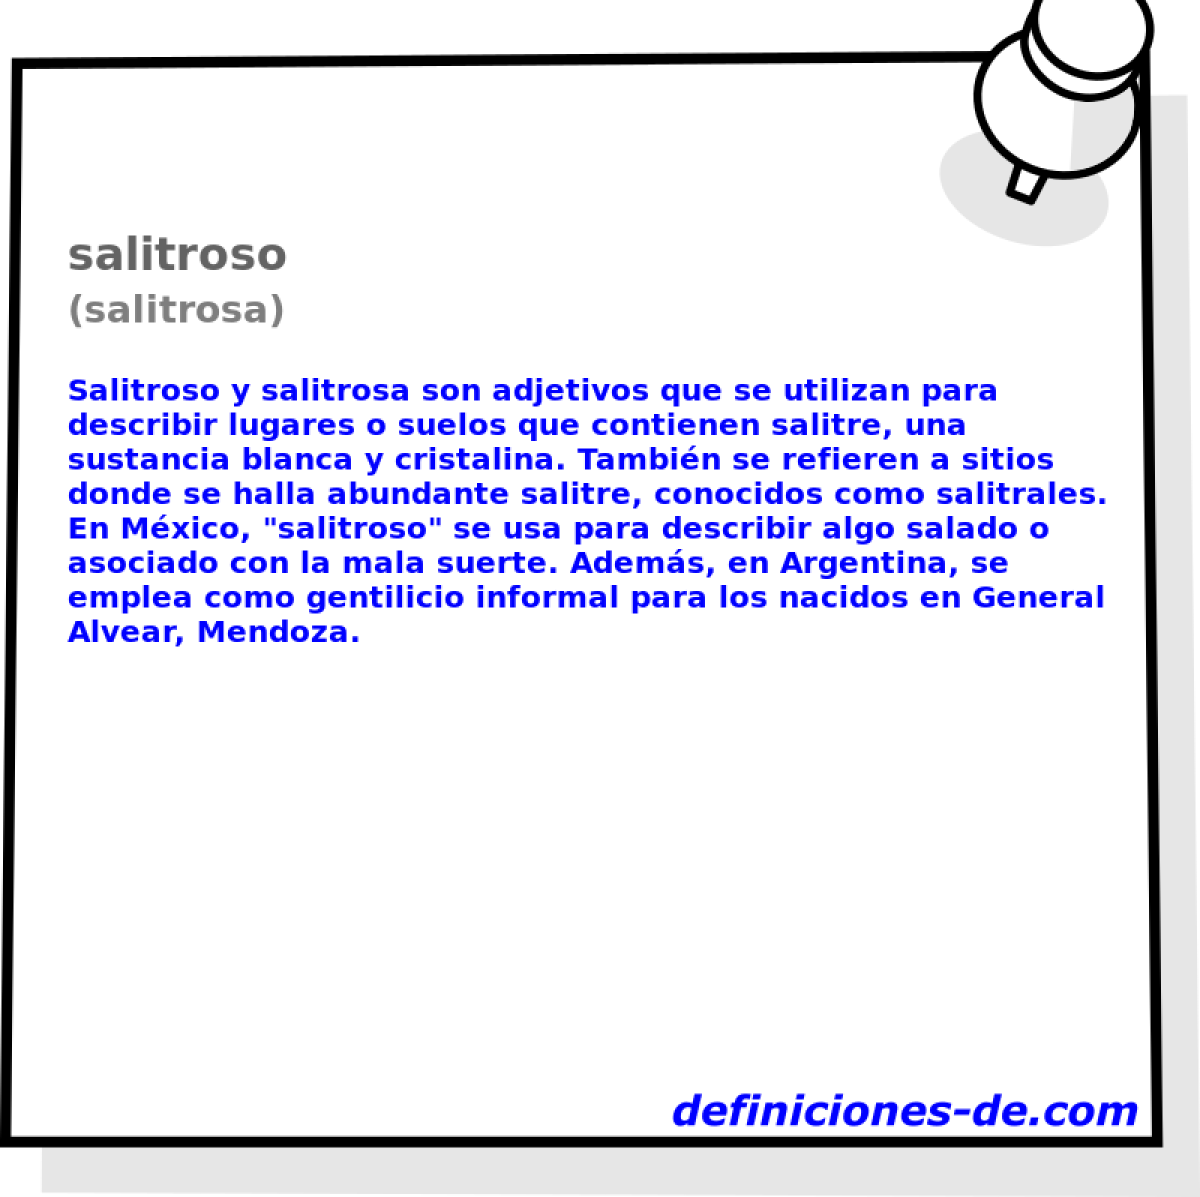 salitroso (salitrosa)